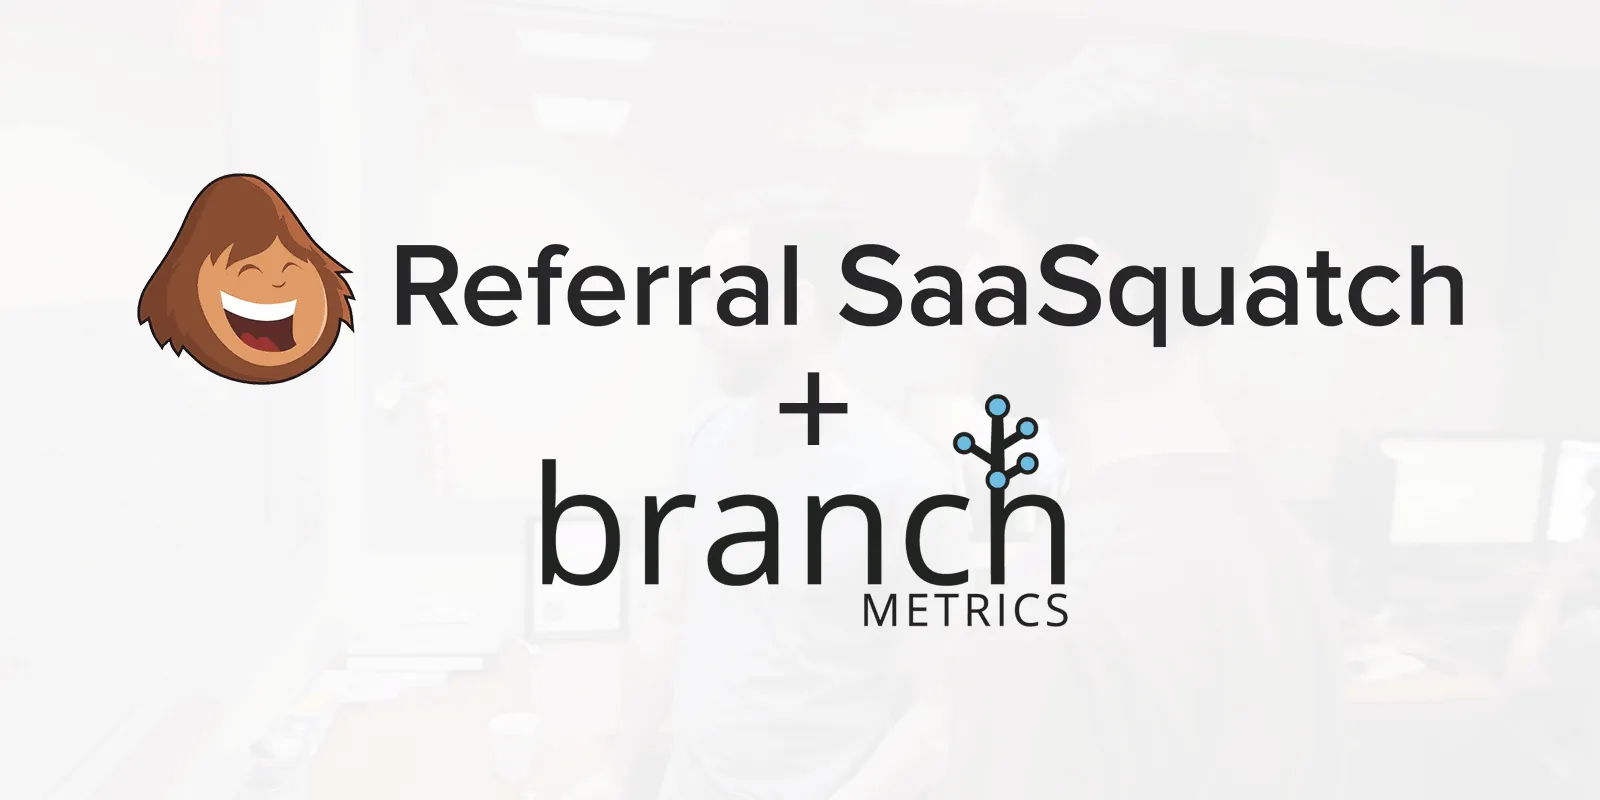 Referral-SaaSquatch-Branch-Metrics-Partnership-Mobile-Deep-Linking